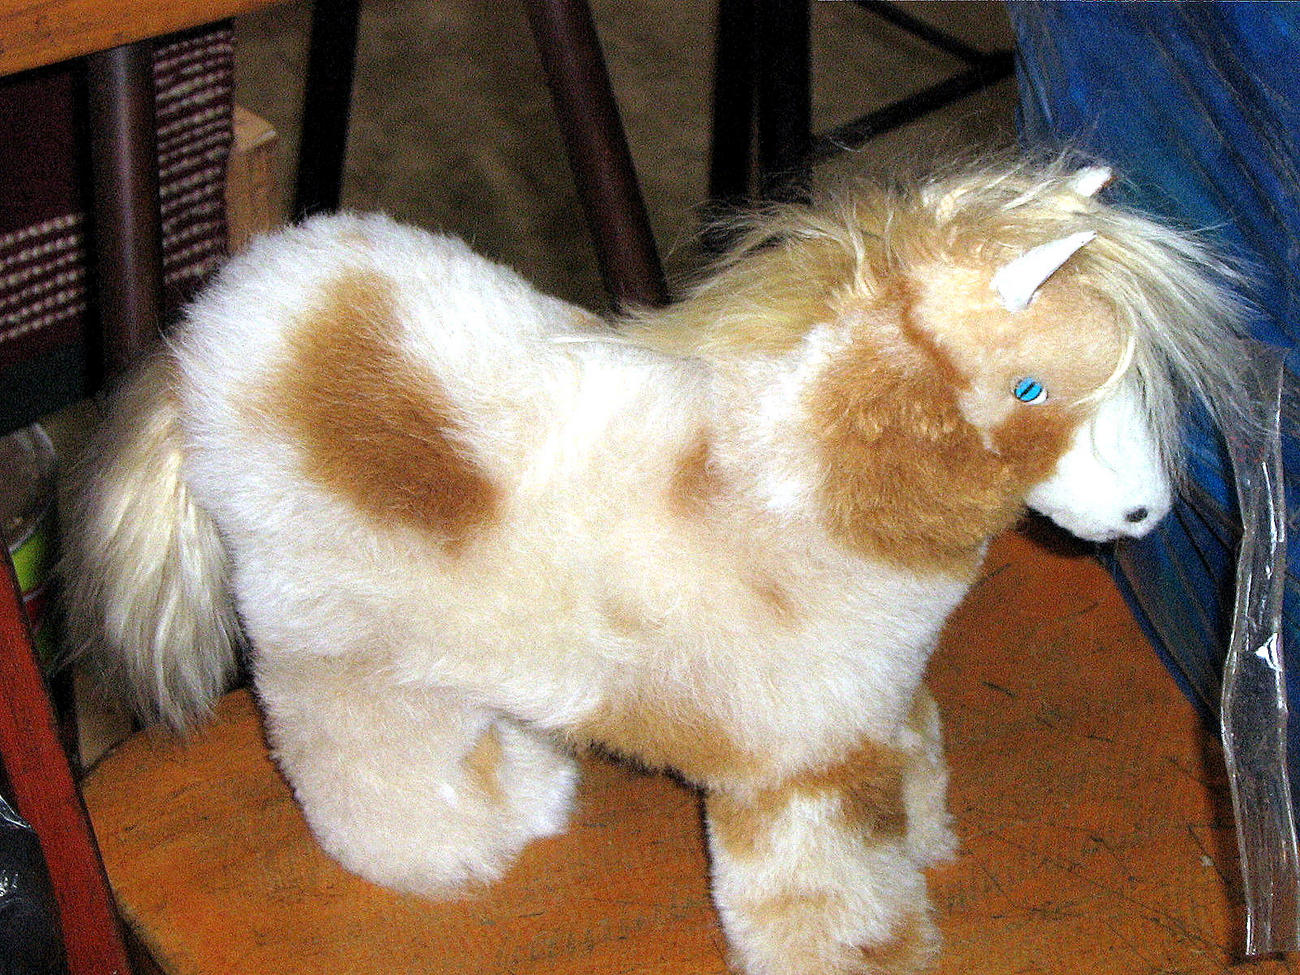 Fur horse figure, handmade with original Alpaca fur - $62.00